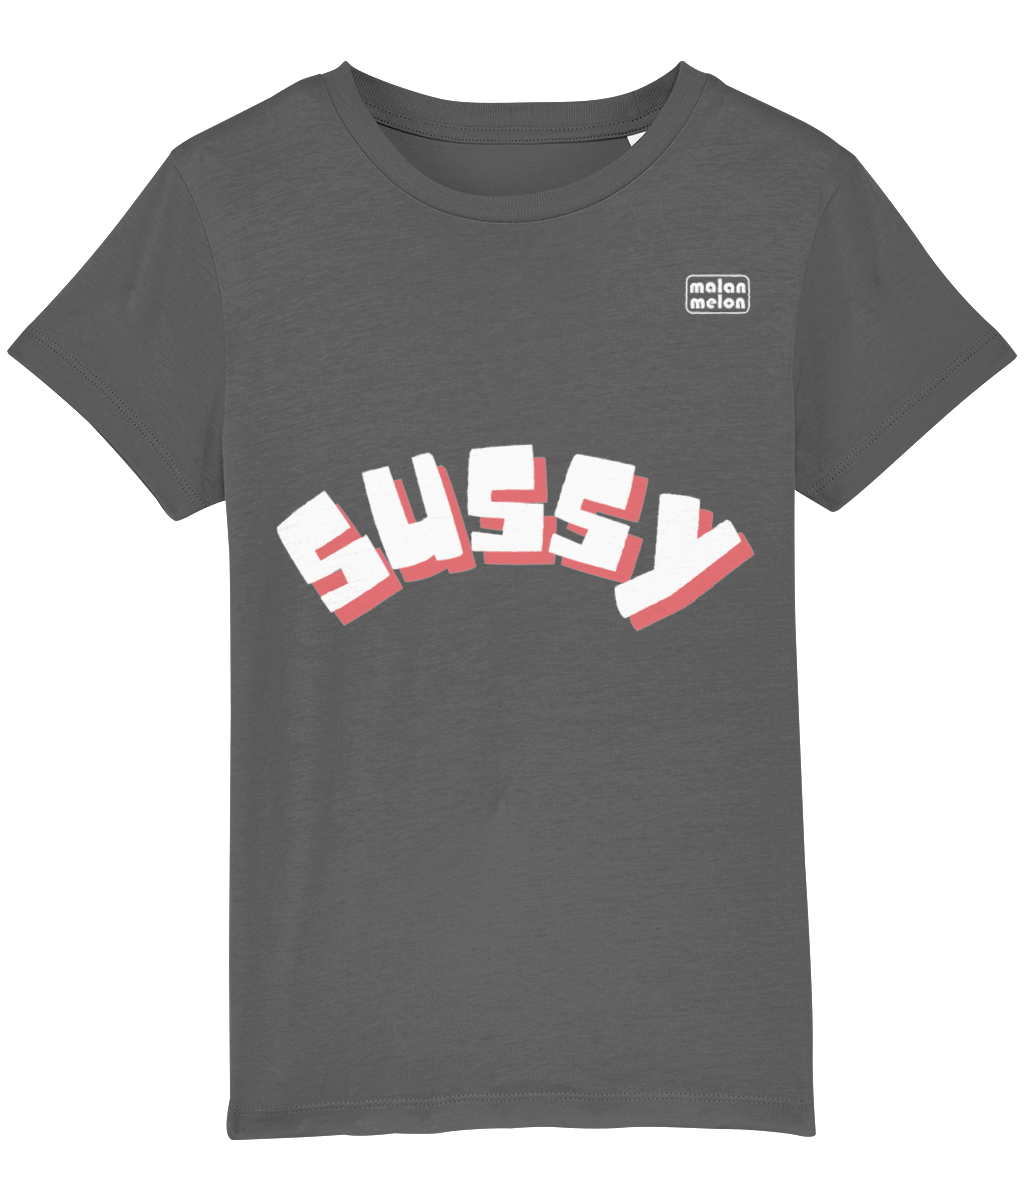 malanmelon - Kids T-Shirt – Organic Cotton – Sussy Slogan - White on Multi-Colours